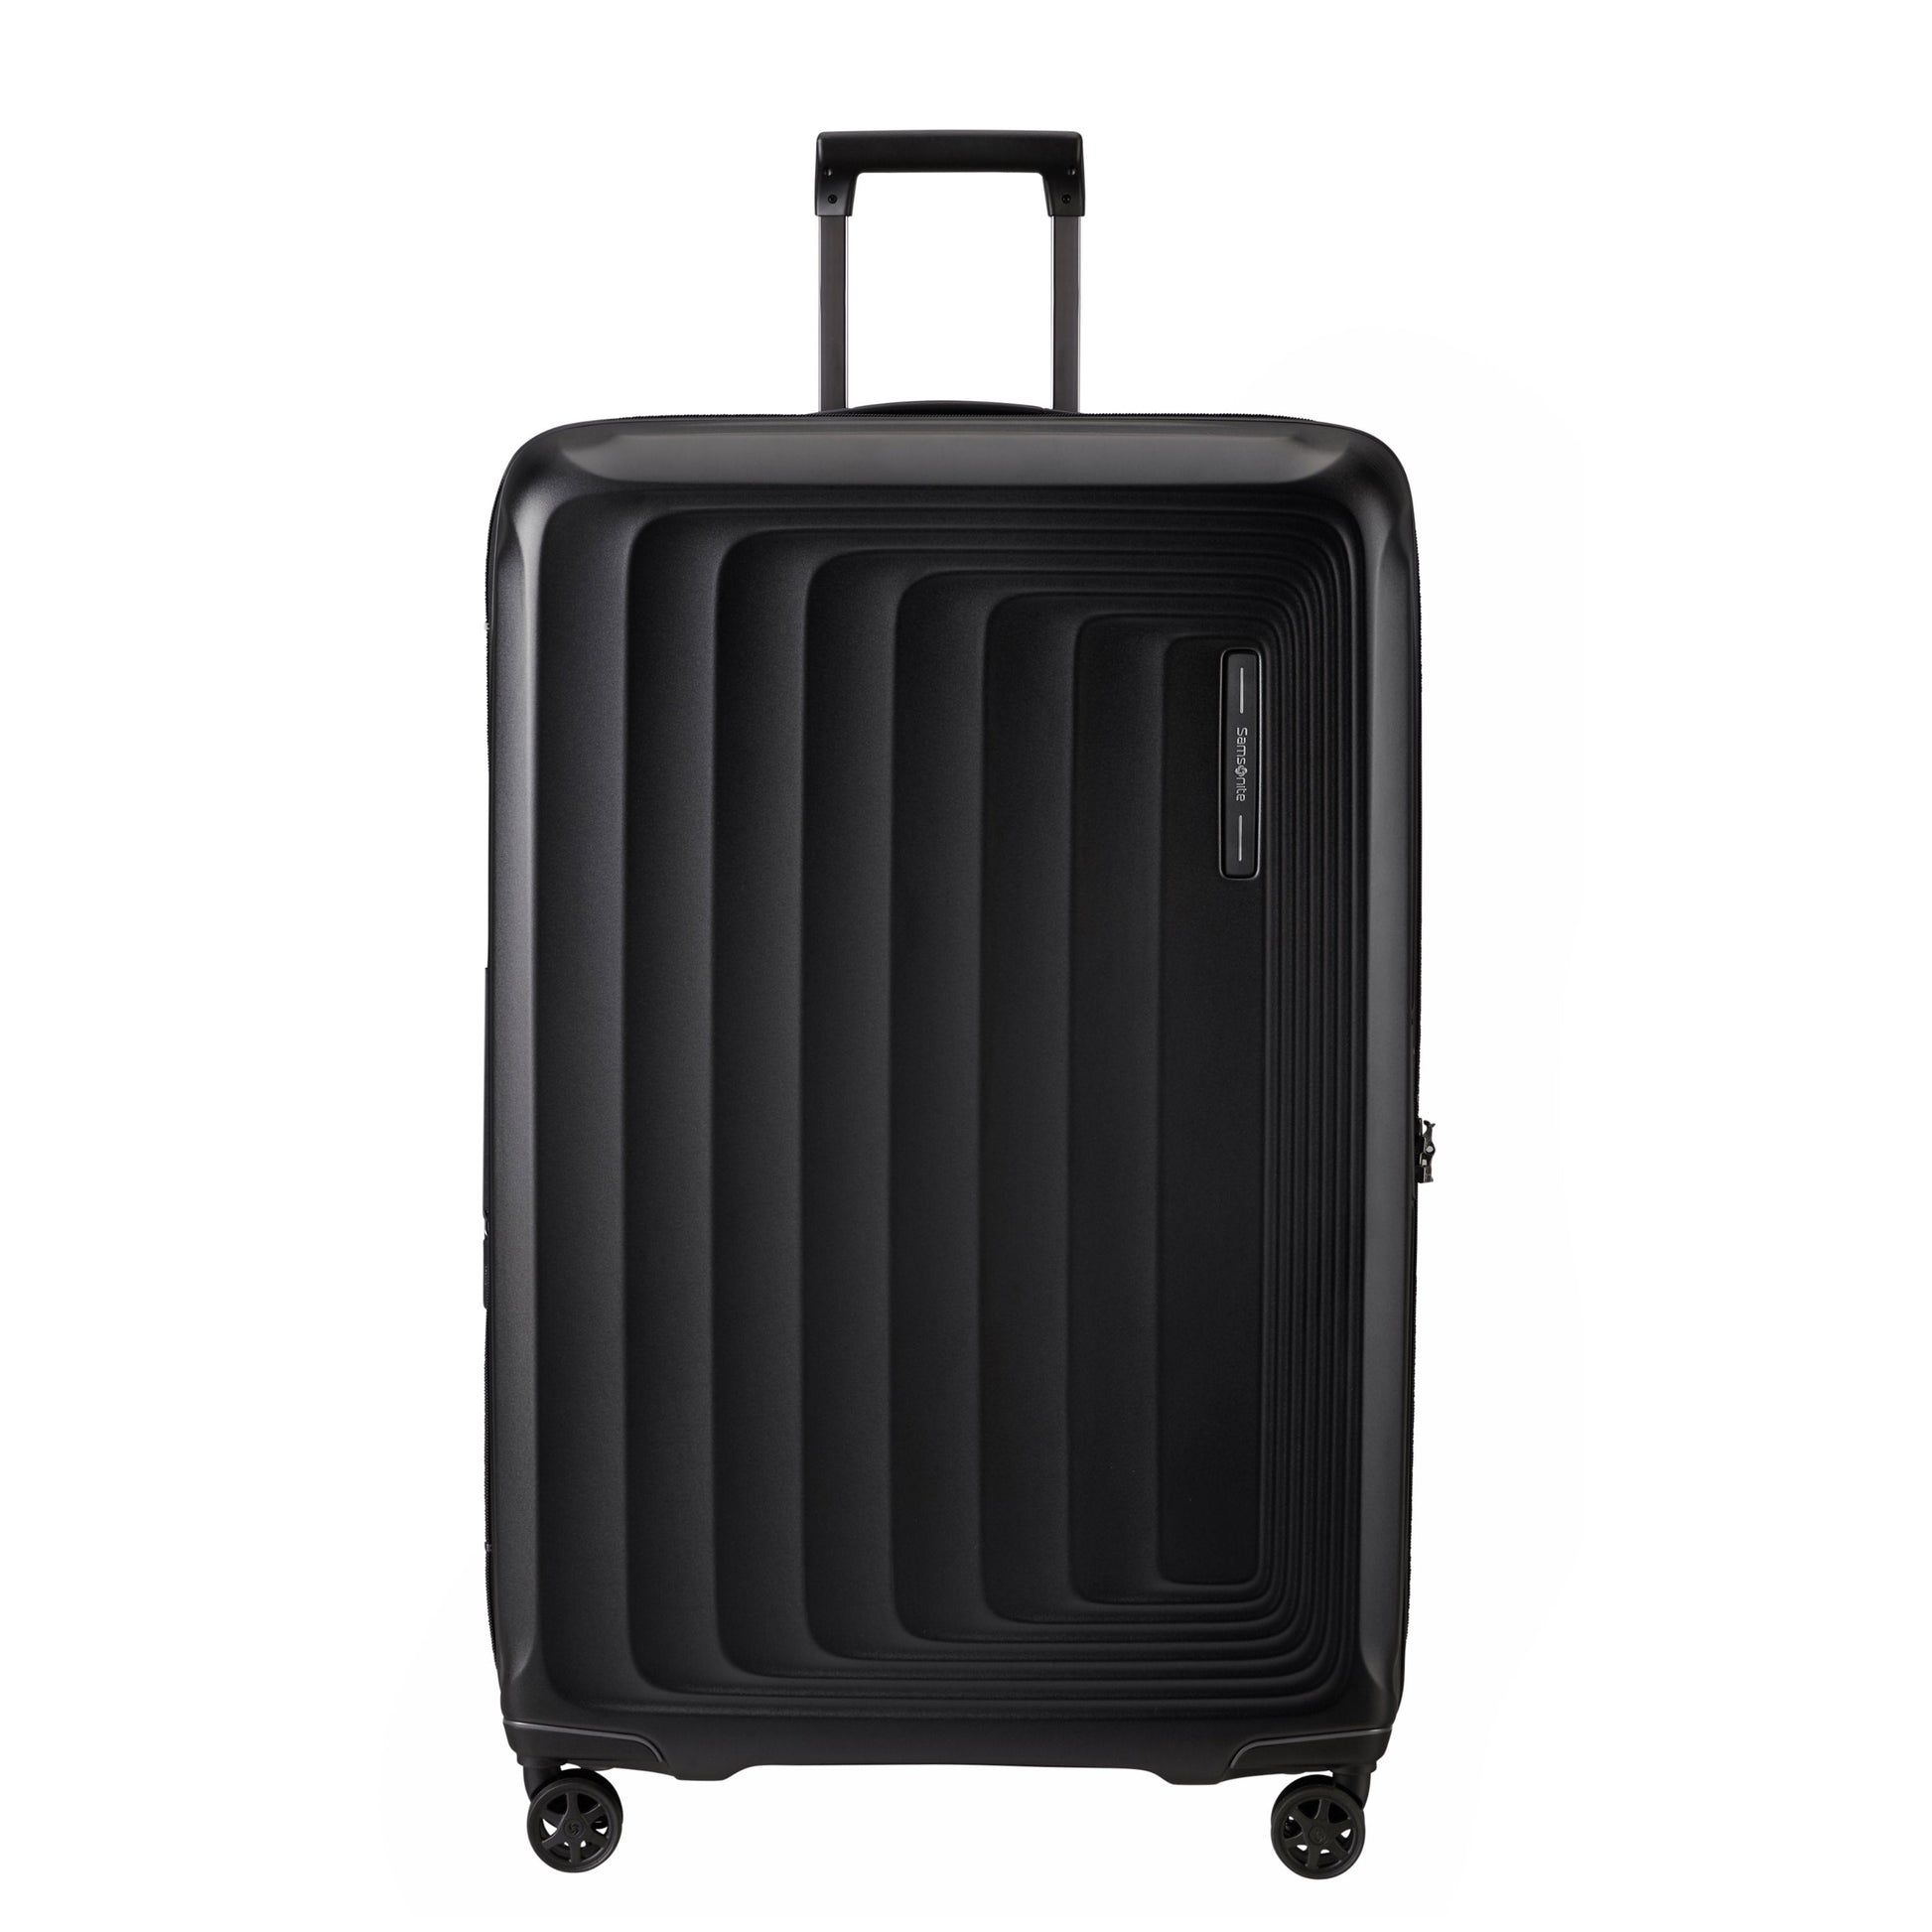 Samsonite Nuon Expandable Large Luggage - Matte Graphite